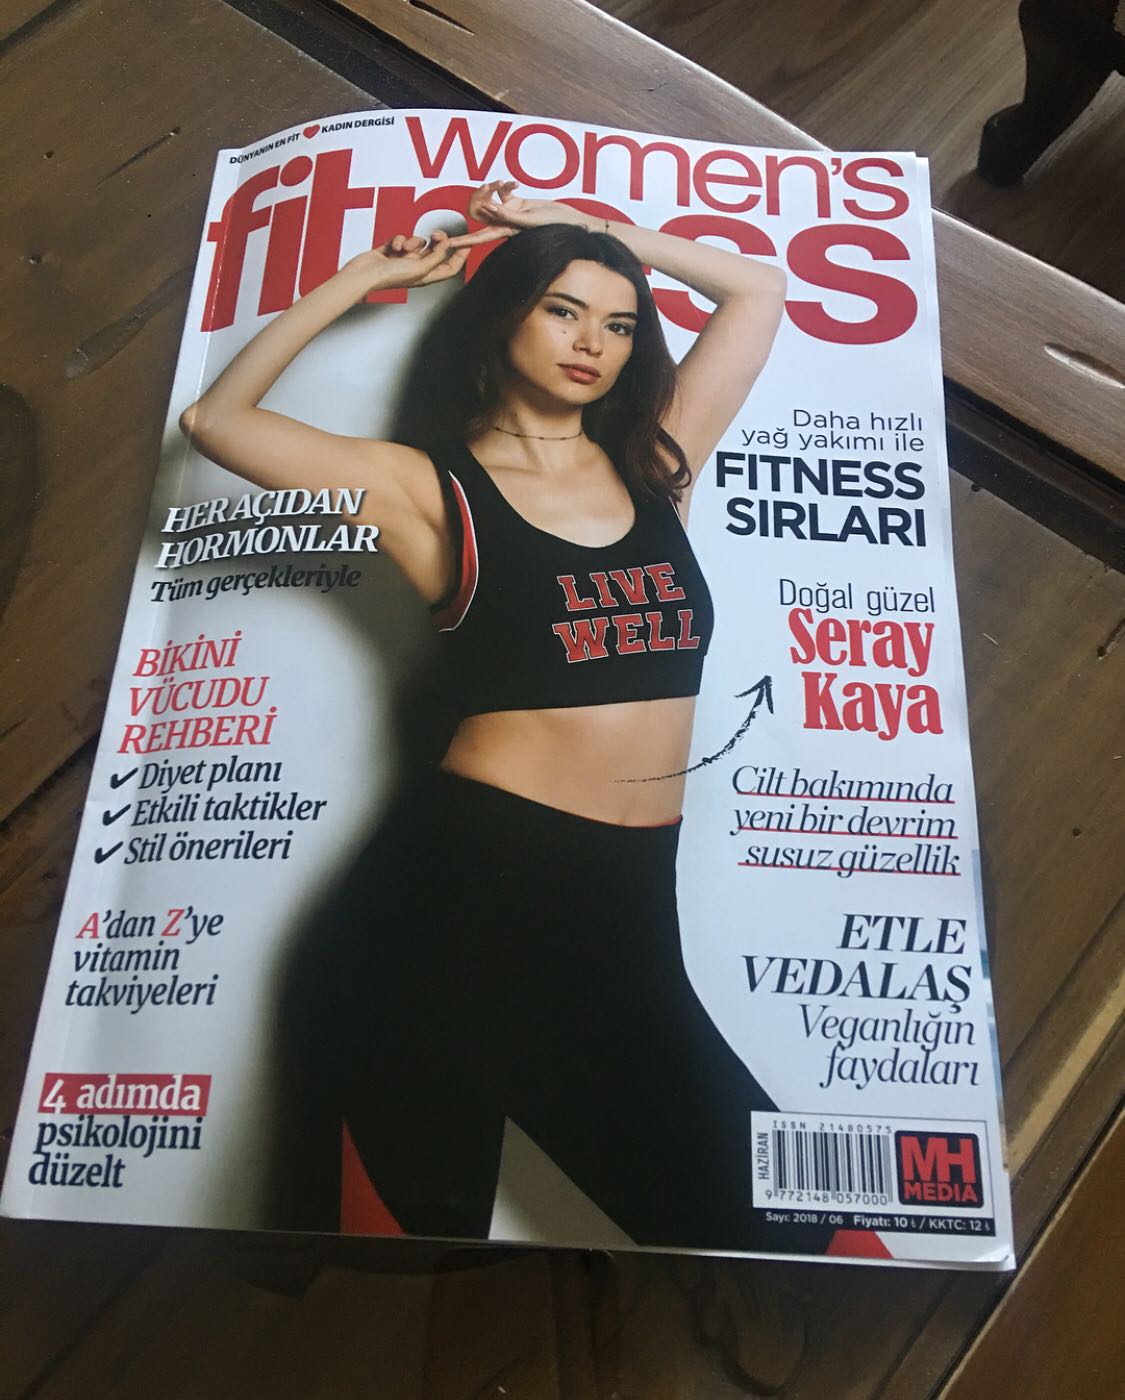 Seray Kaya Women’s Fitness Haziran Sayısında